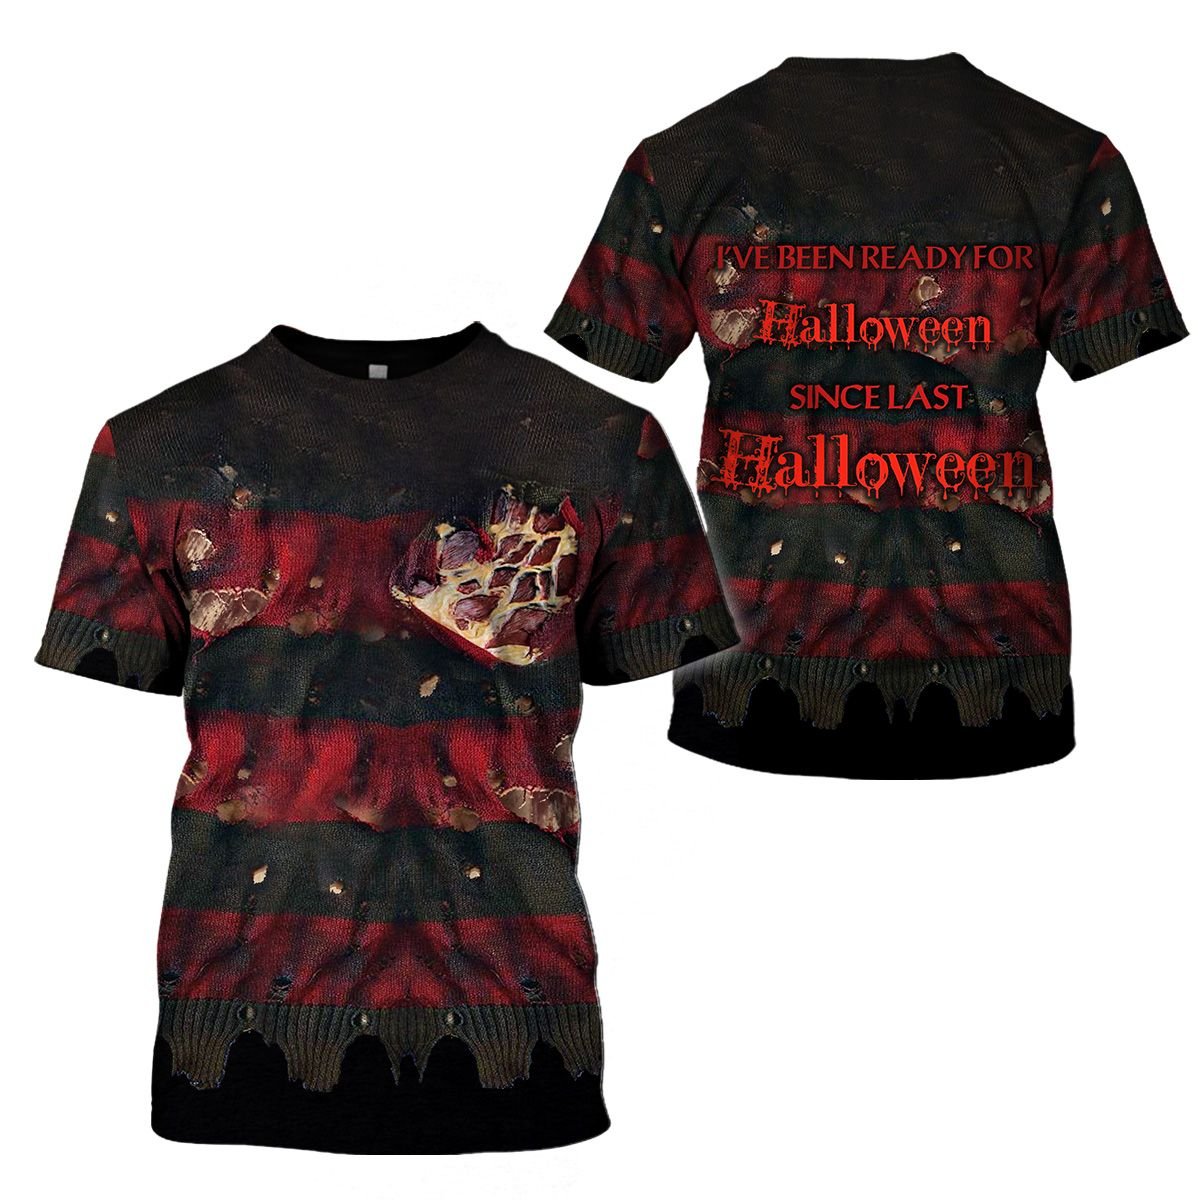 Freddy Krueger Ive been ready Halloween since last Hallween 3d hoodie and shirt 1